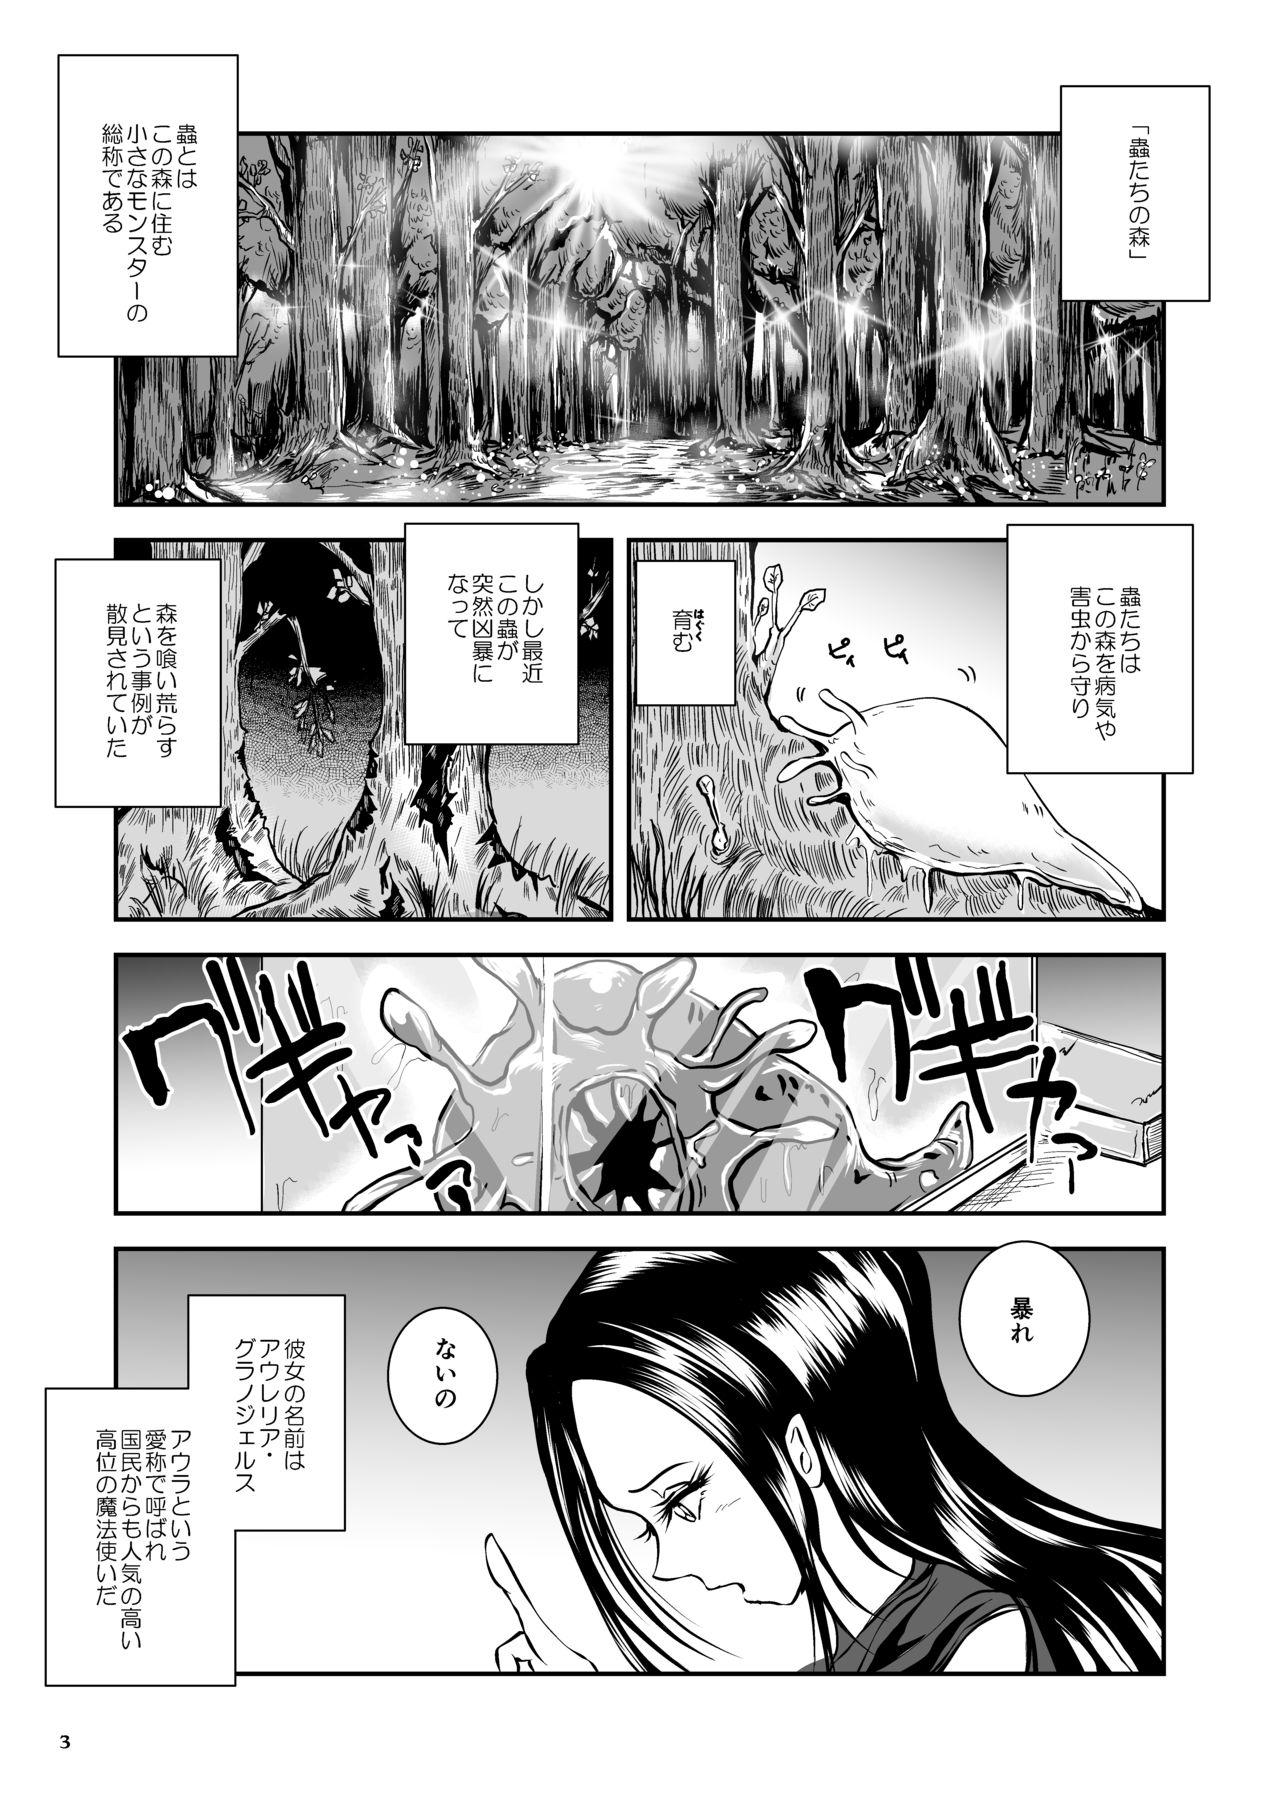 Brasileiro Oonamekuji to Kurokami no Mahoutsukai - Parasitized Giant Slugs V.S. Sorceress of the Black Hair as Aura Clitoris - Page 3